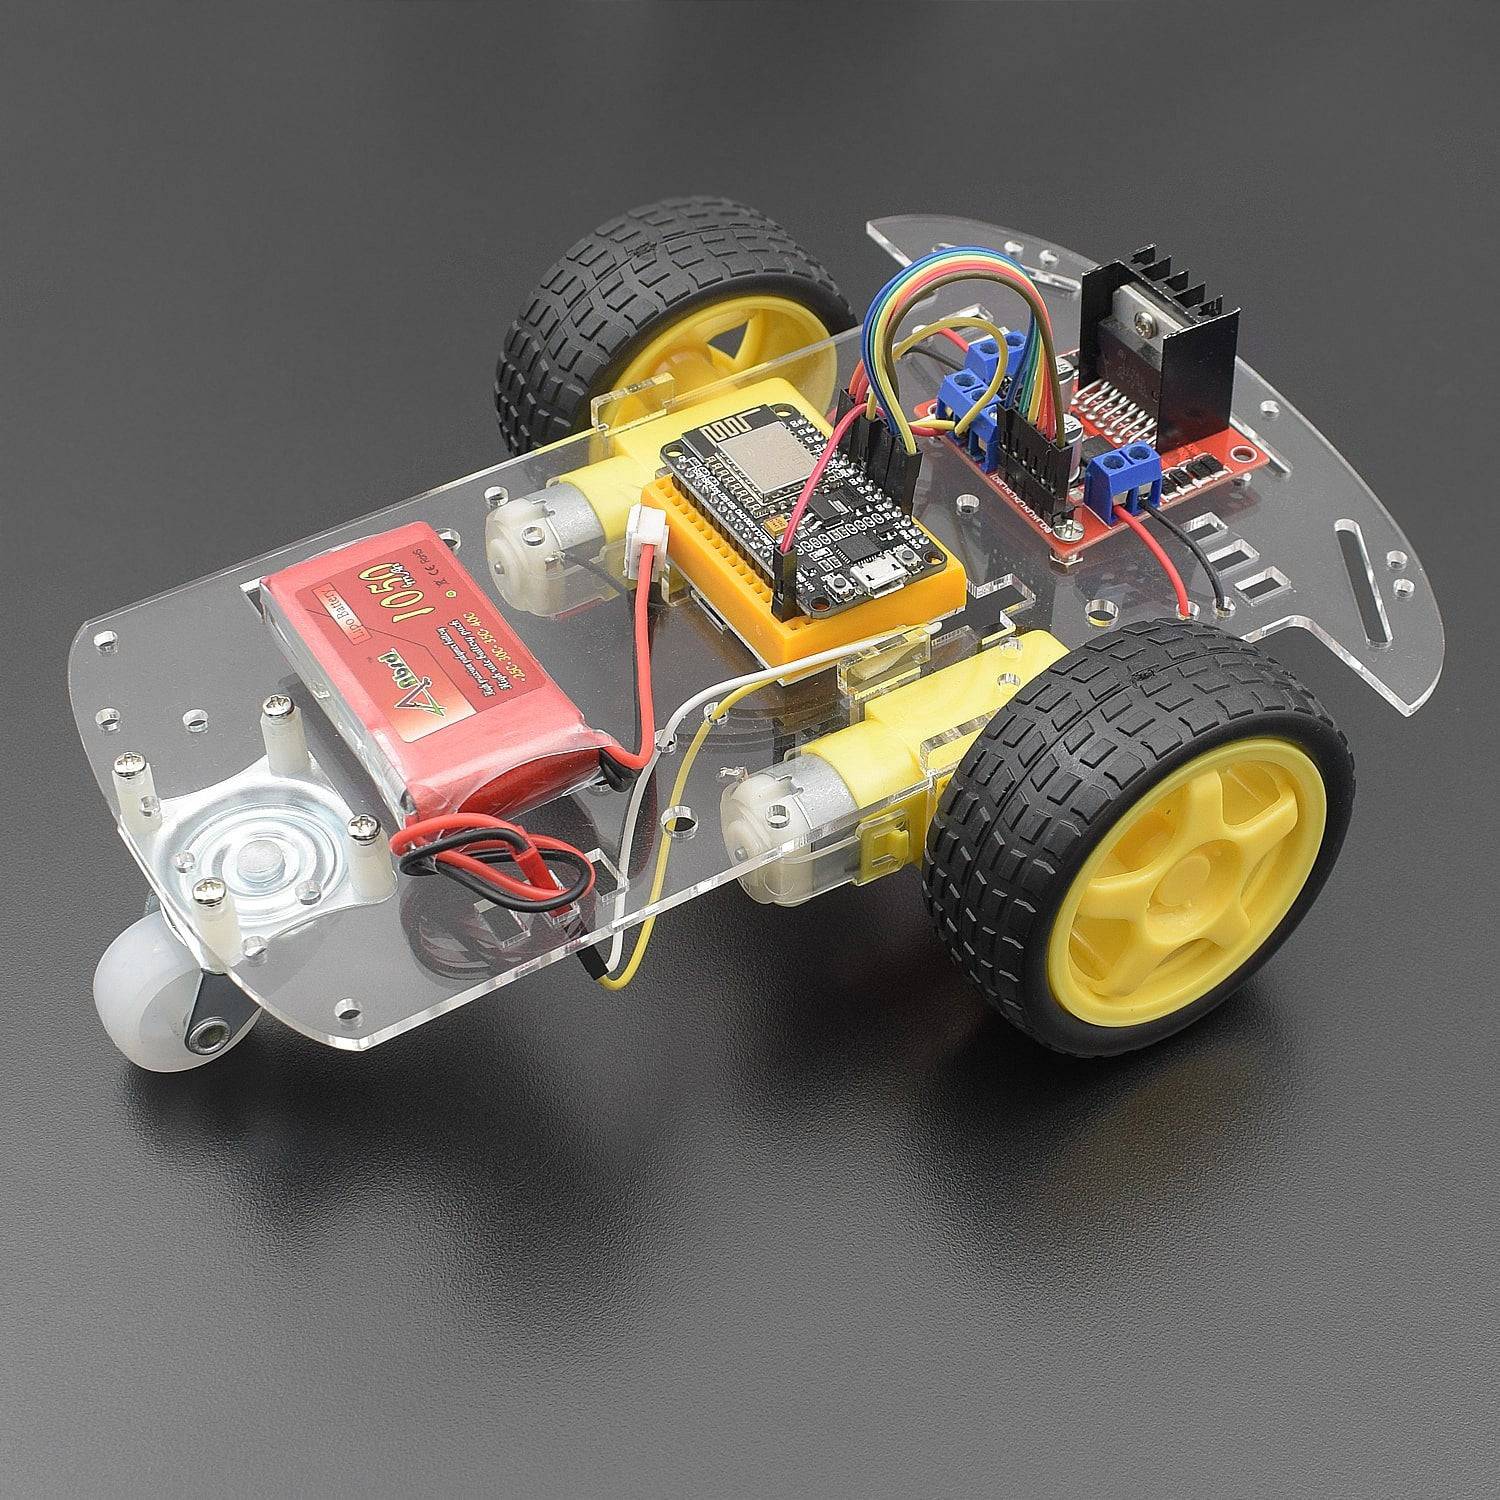 Make an IoT based robotic Wi-Fi car using L298n Motor driver